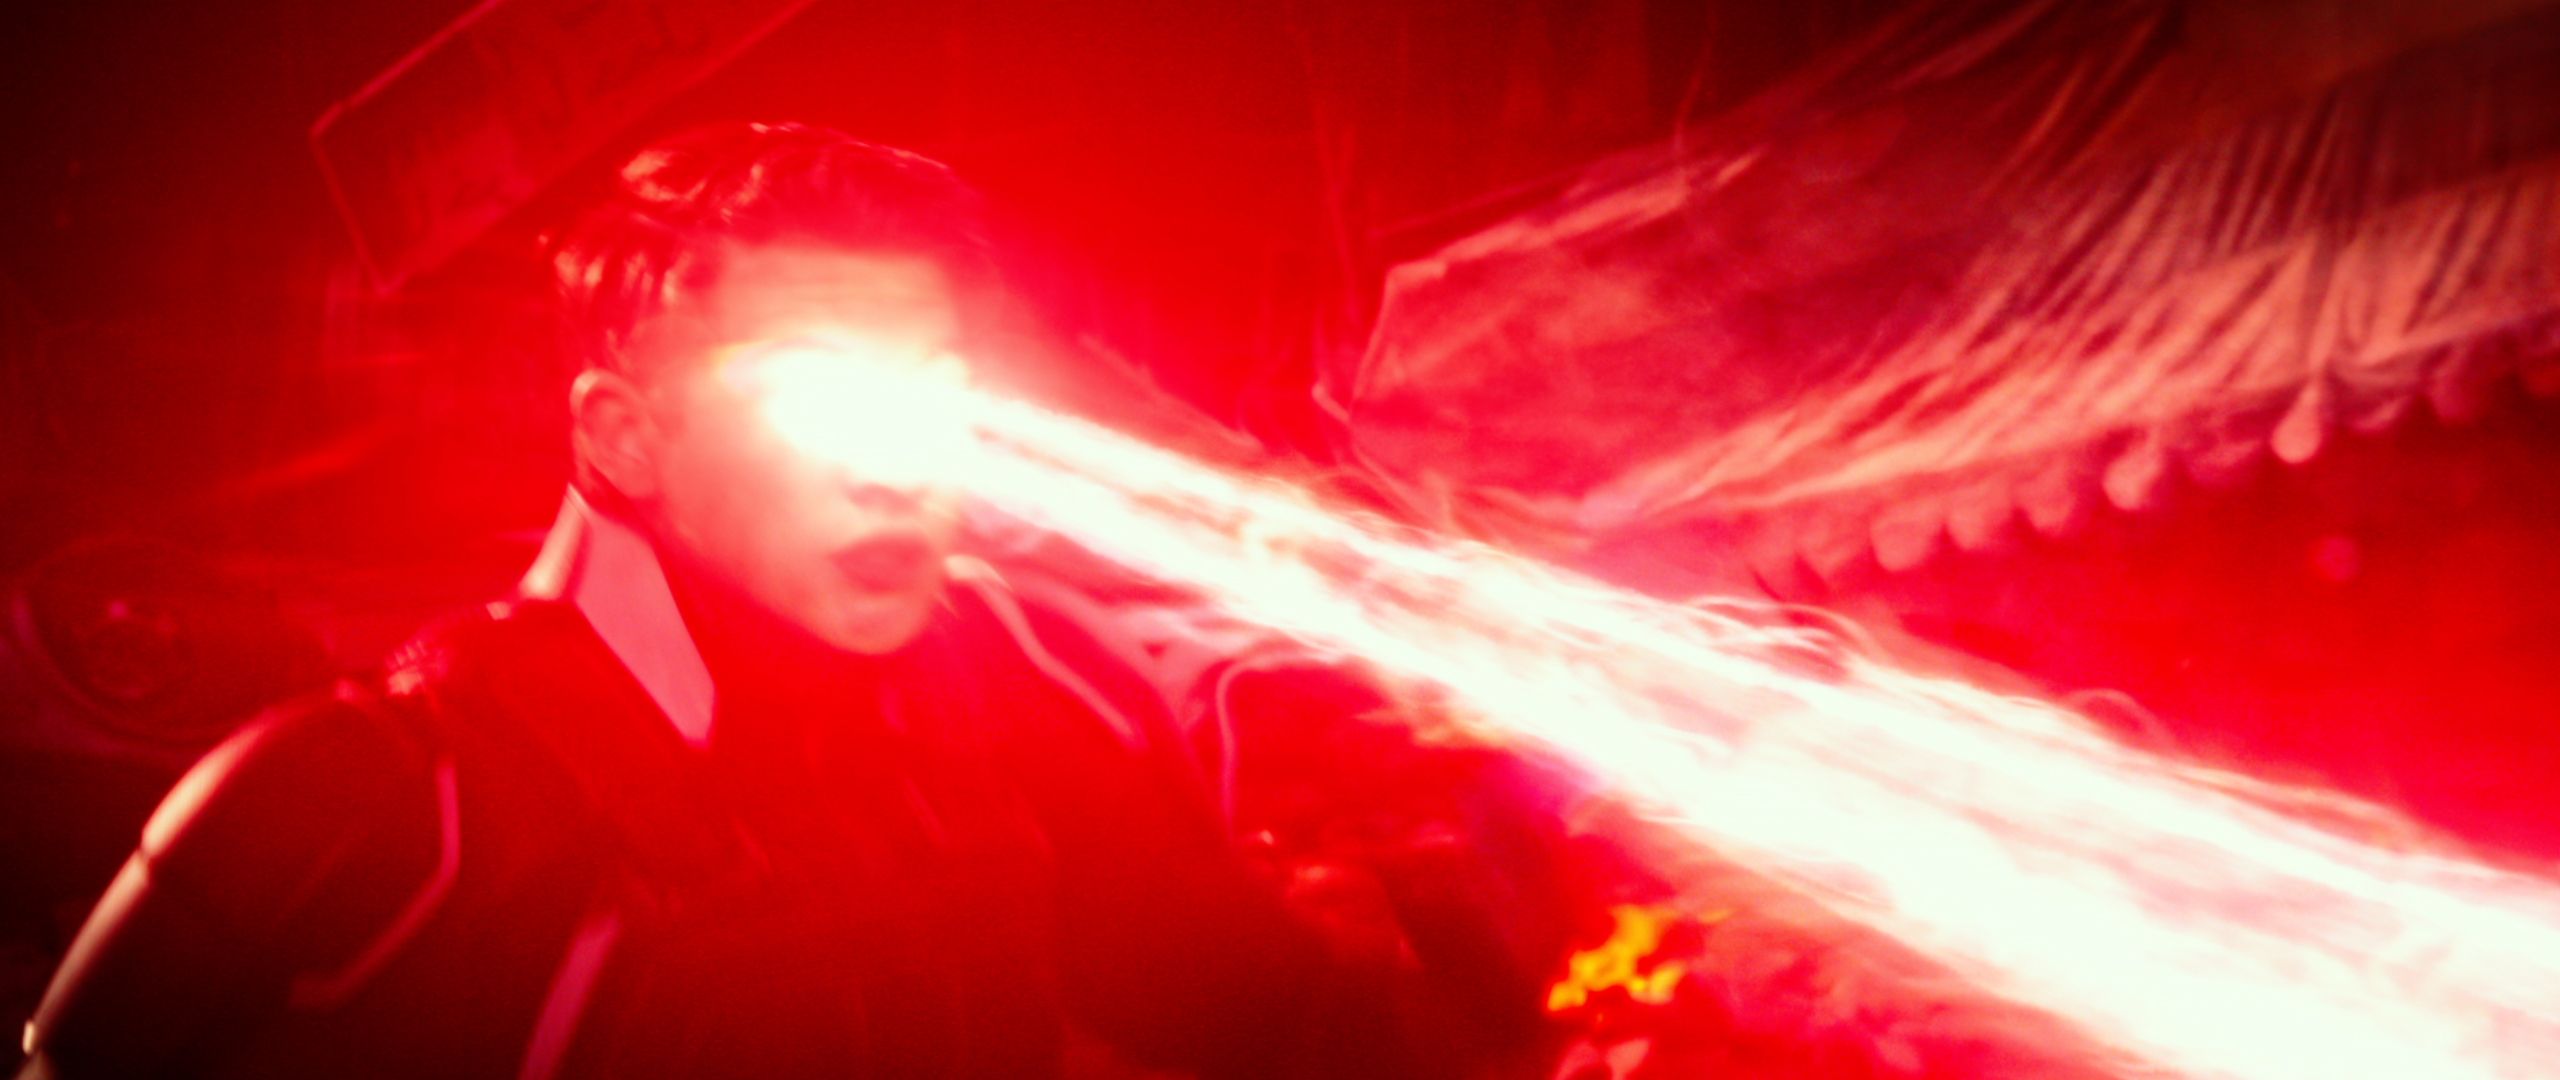 X-Men: Apocalypse Clip Shows Cyclops Getting His Powers | Collider